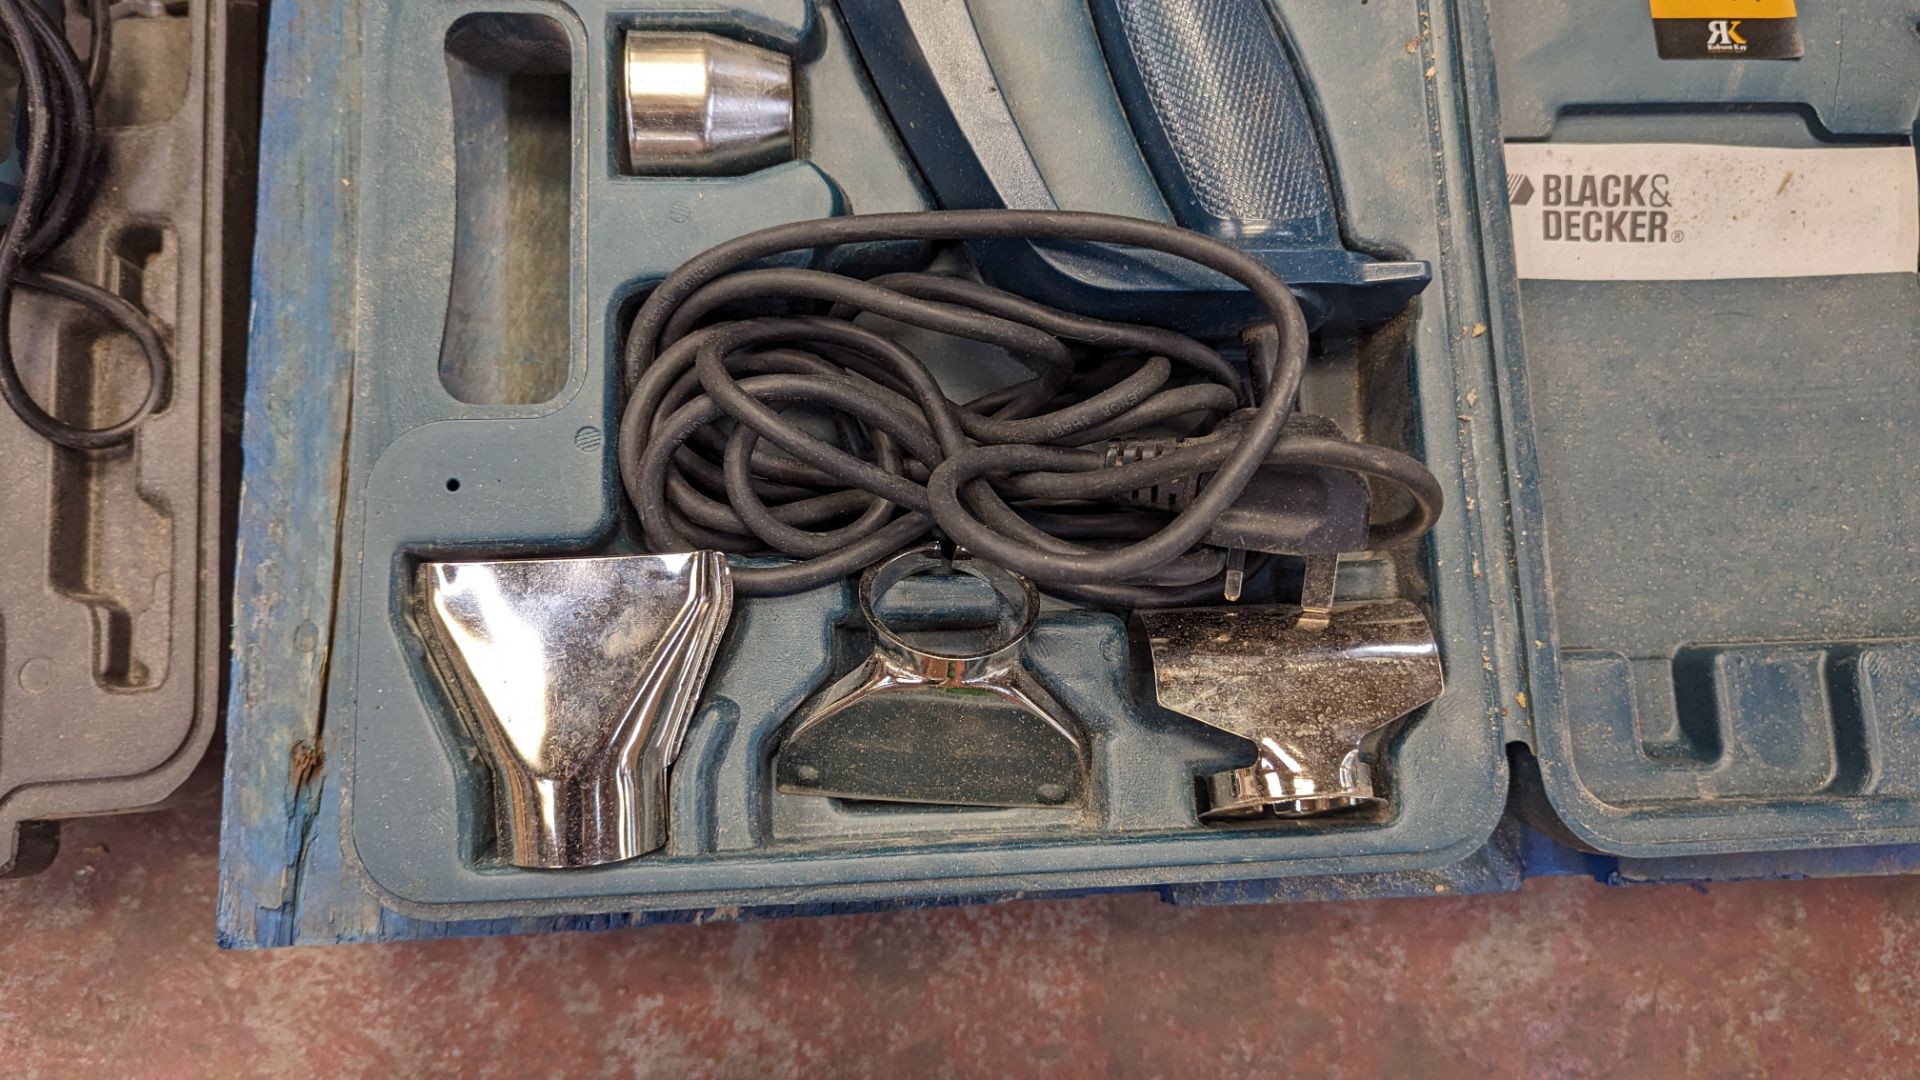 Black & Decker heat gun kit in case - Image 5 of 7